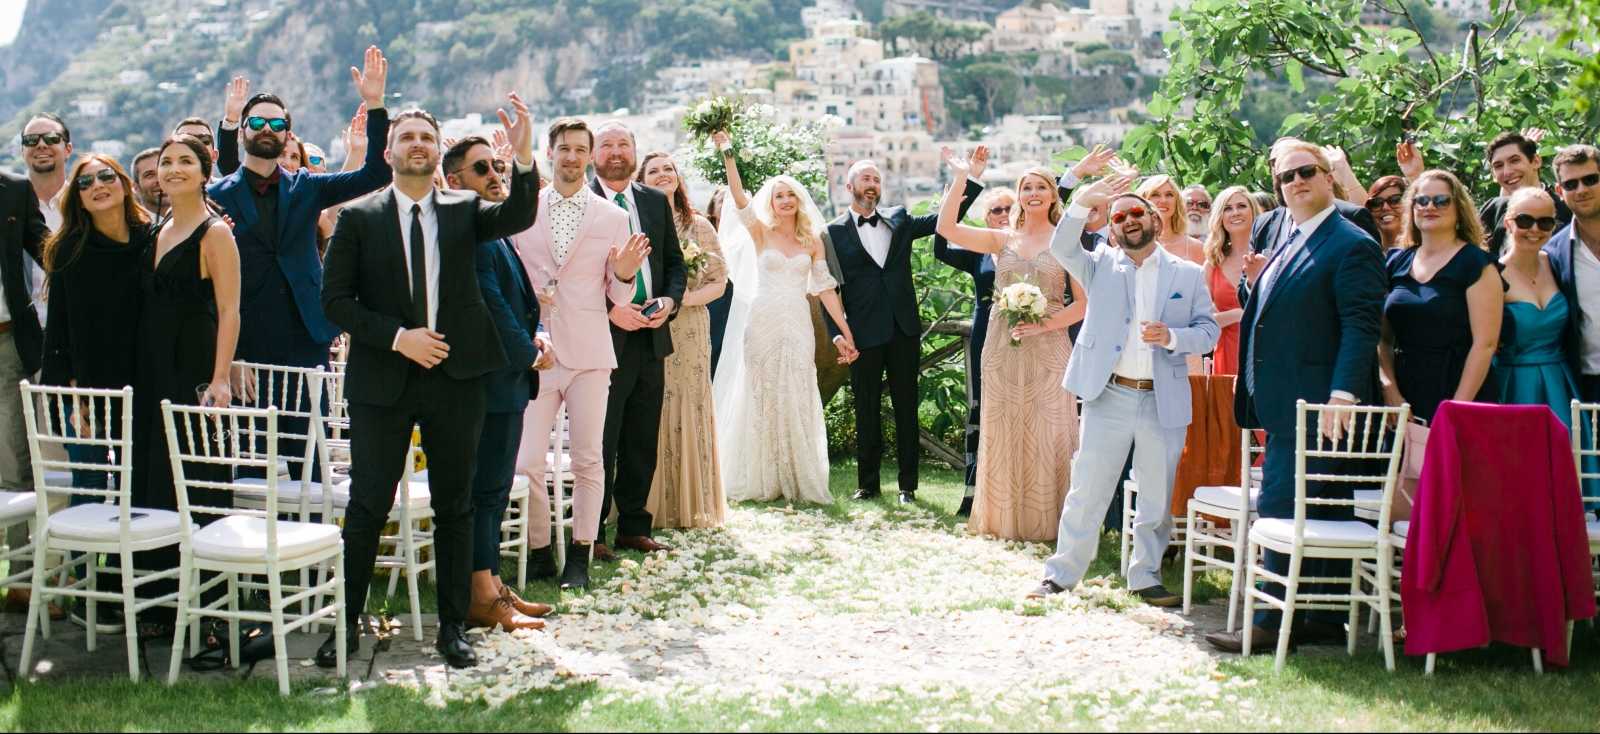 Đám cưới kiểu Ý